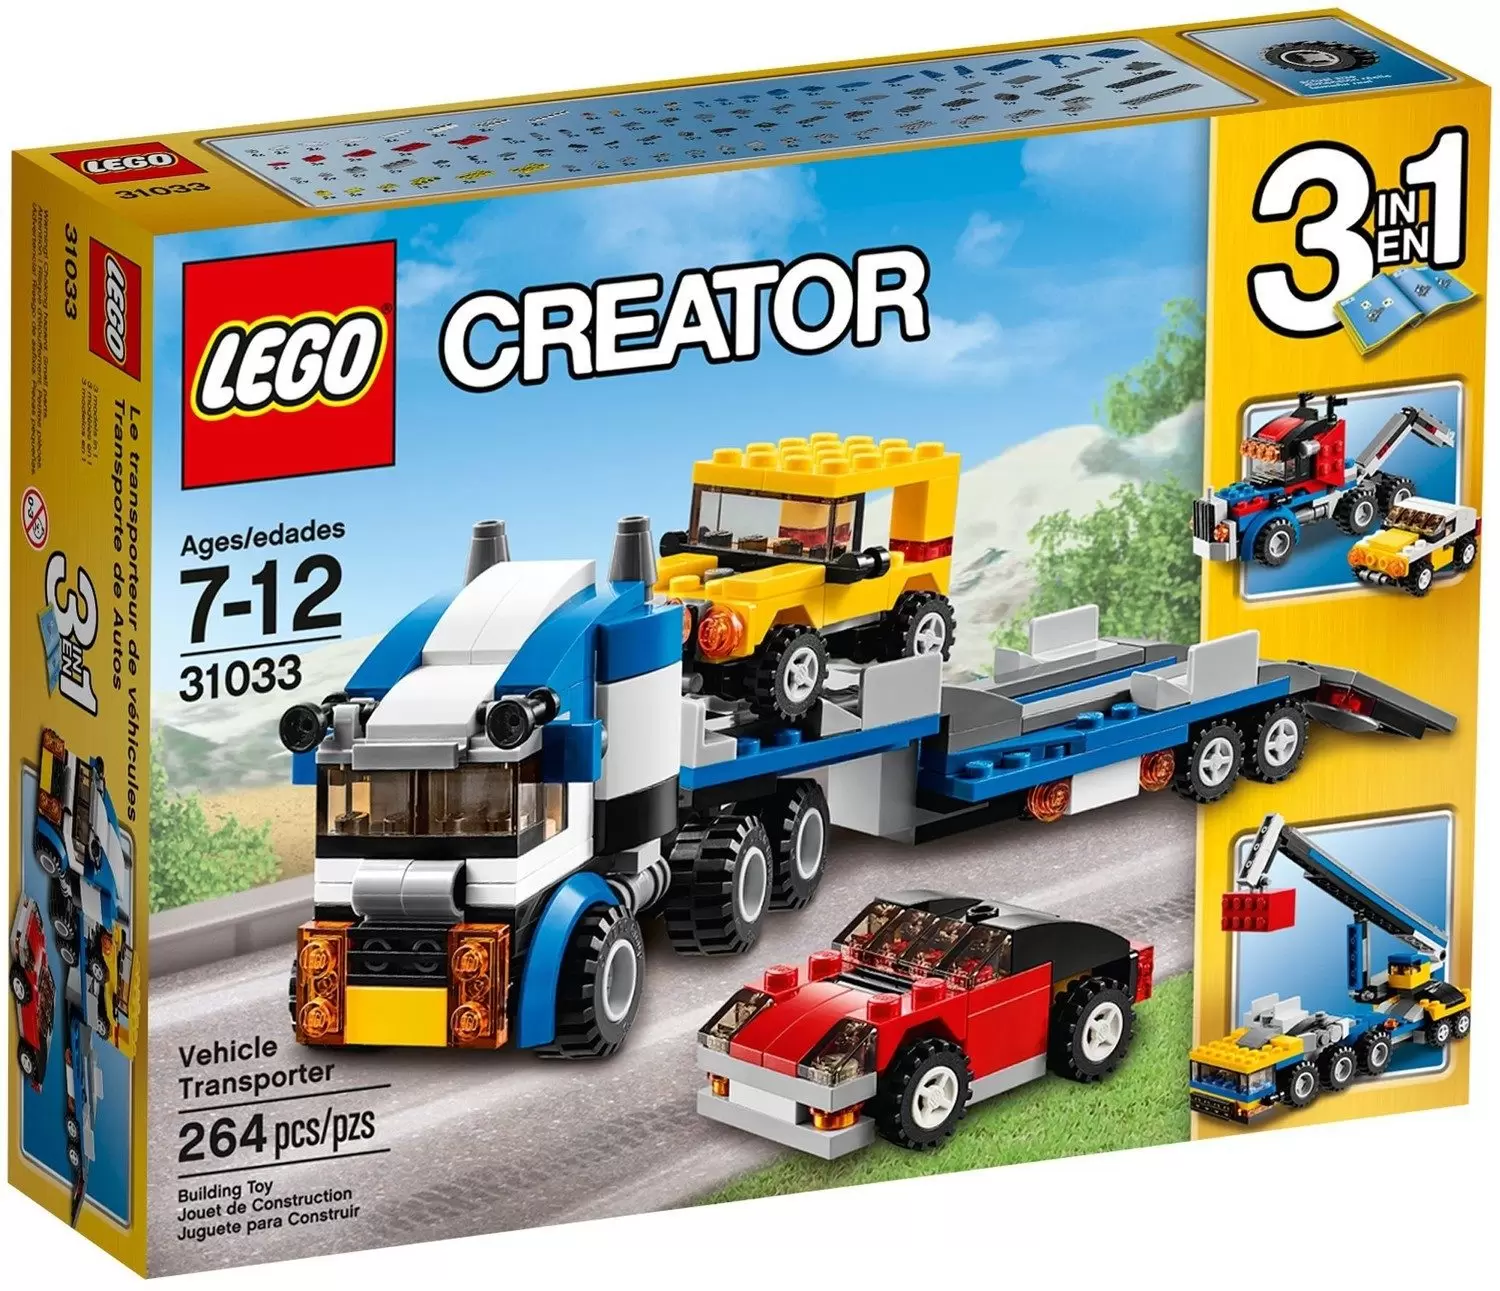 LEGO Creator - Vehicle Transporter